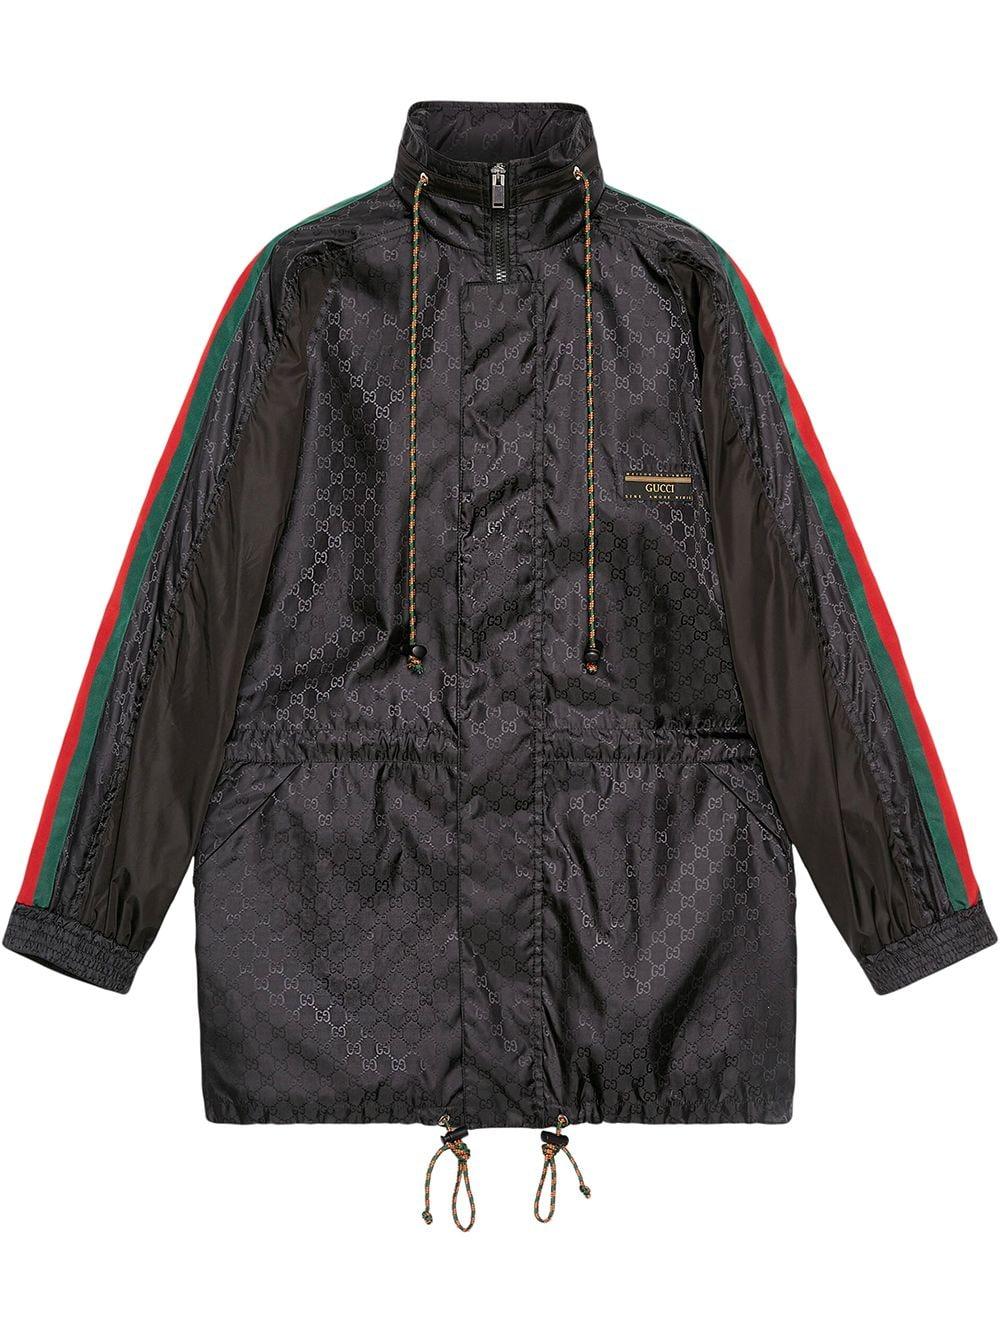 Gucci GG Jacquard Nylon Jacket in Black for Men | Lyst